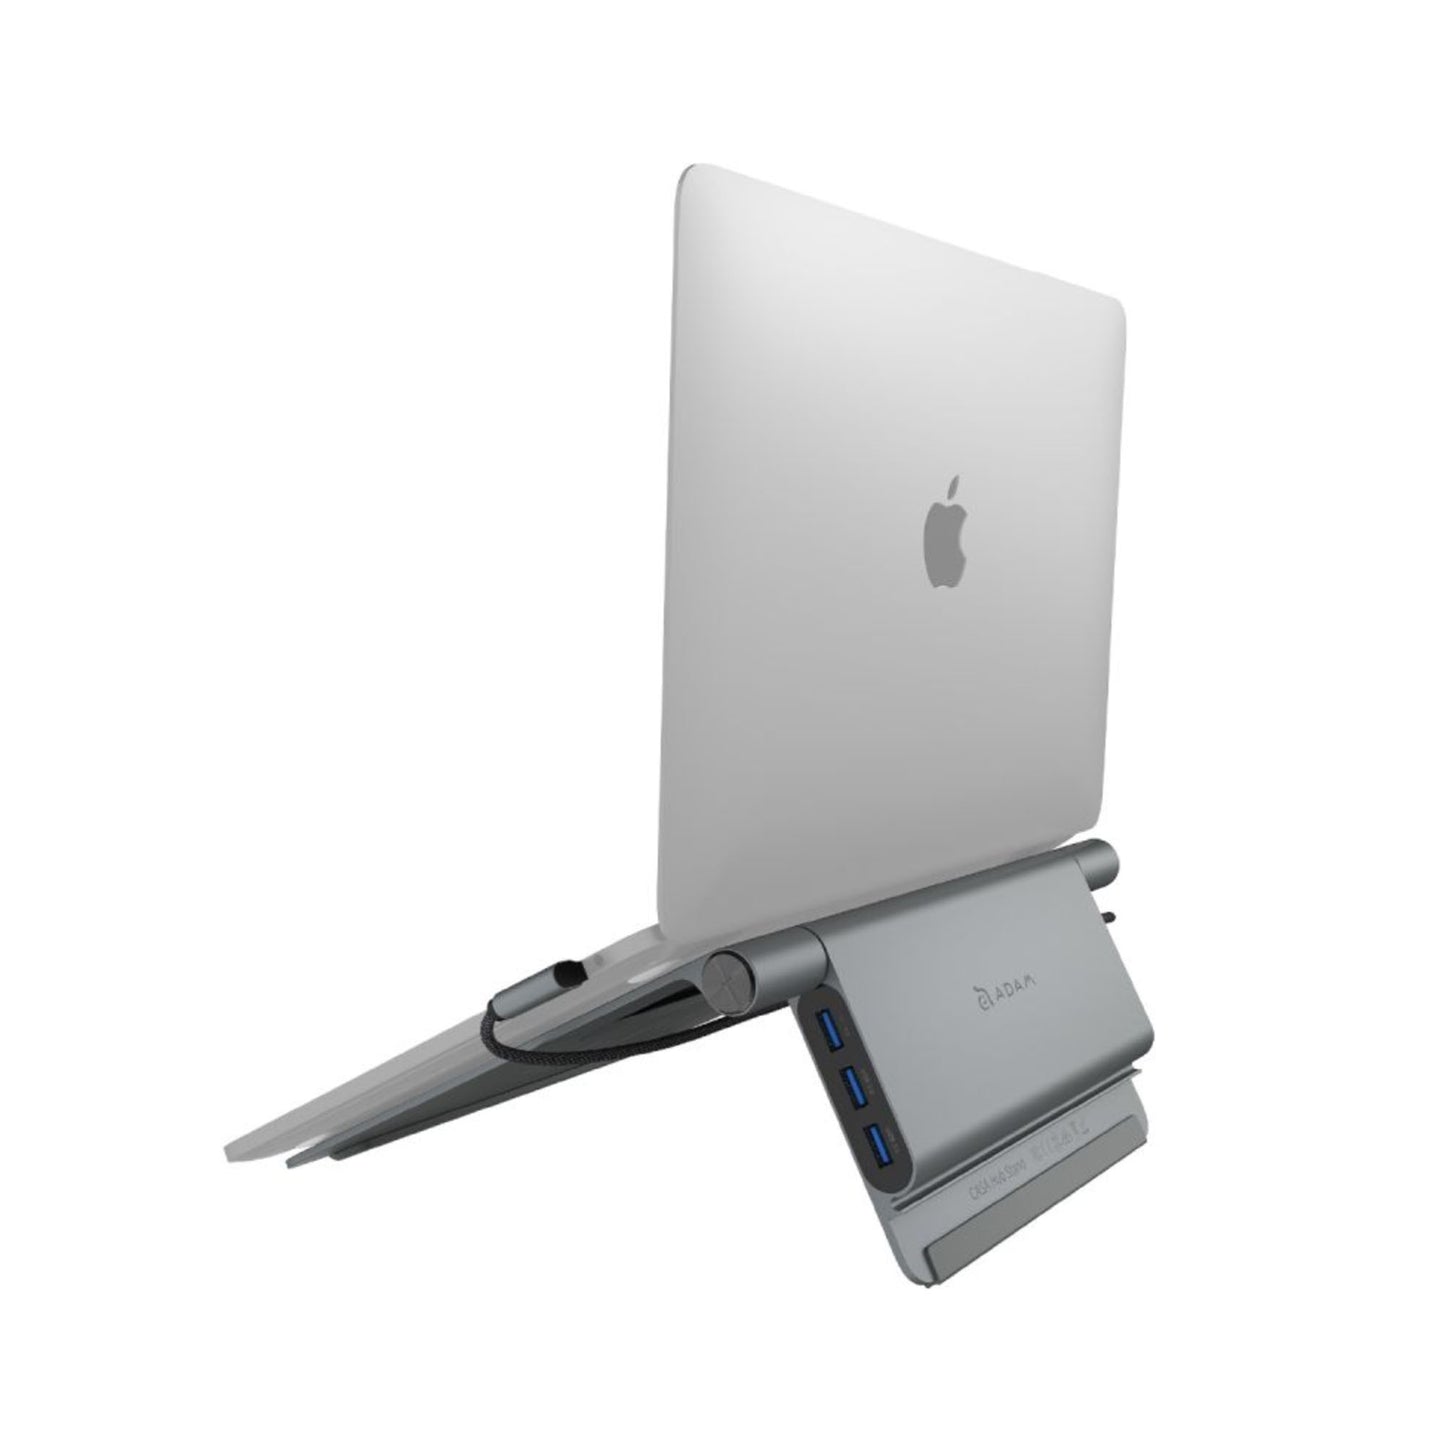 ADAM ELEMENTS Casa Hub USB C 5-in-1 Laptop Stand Hub - Grey